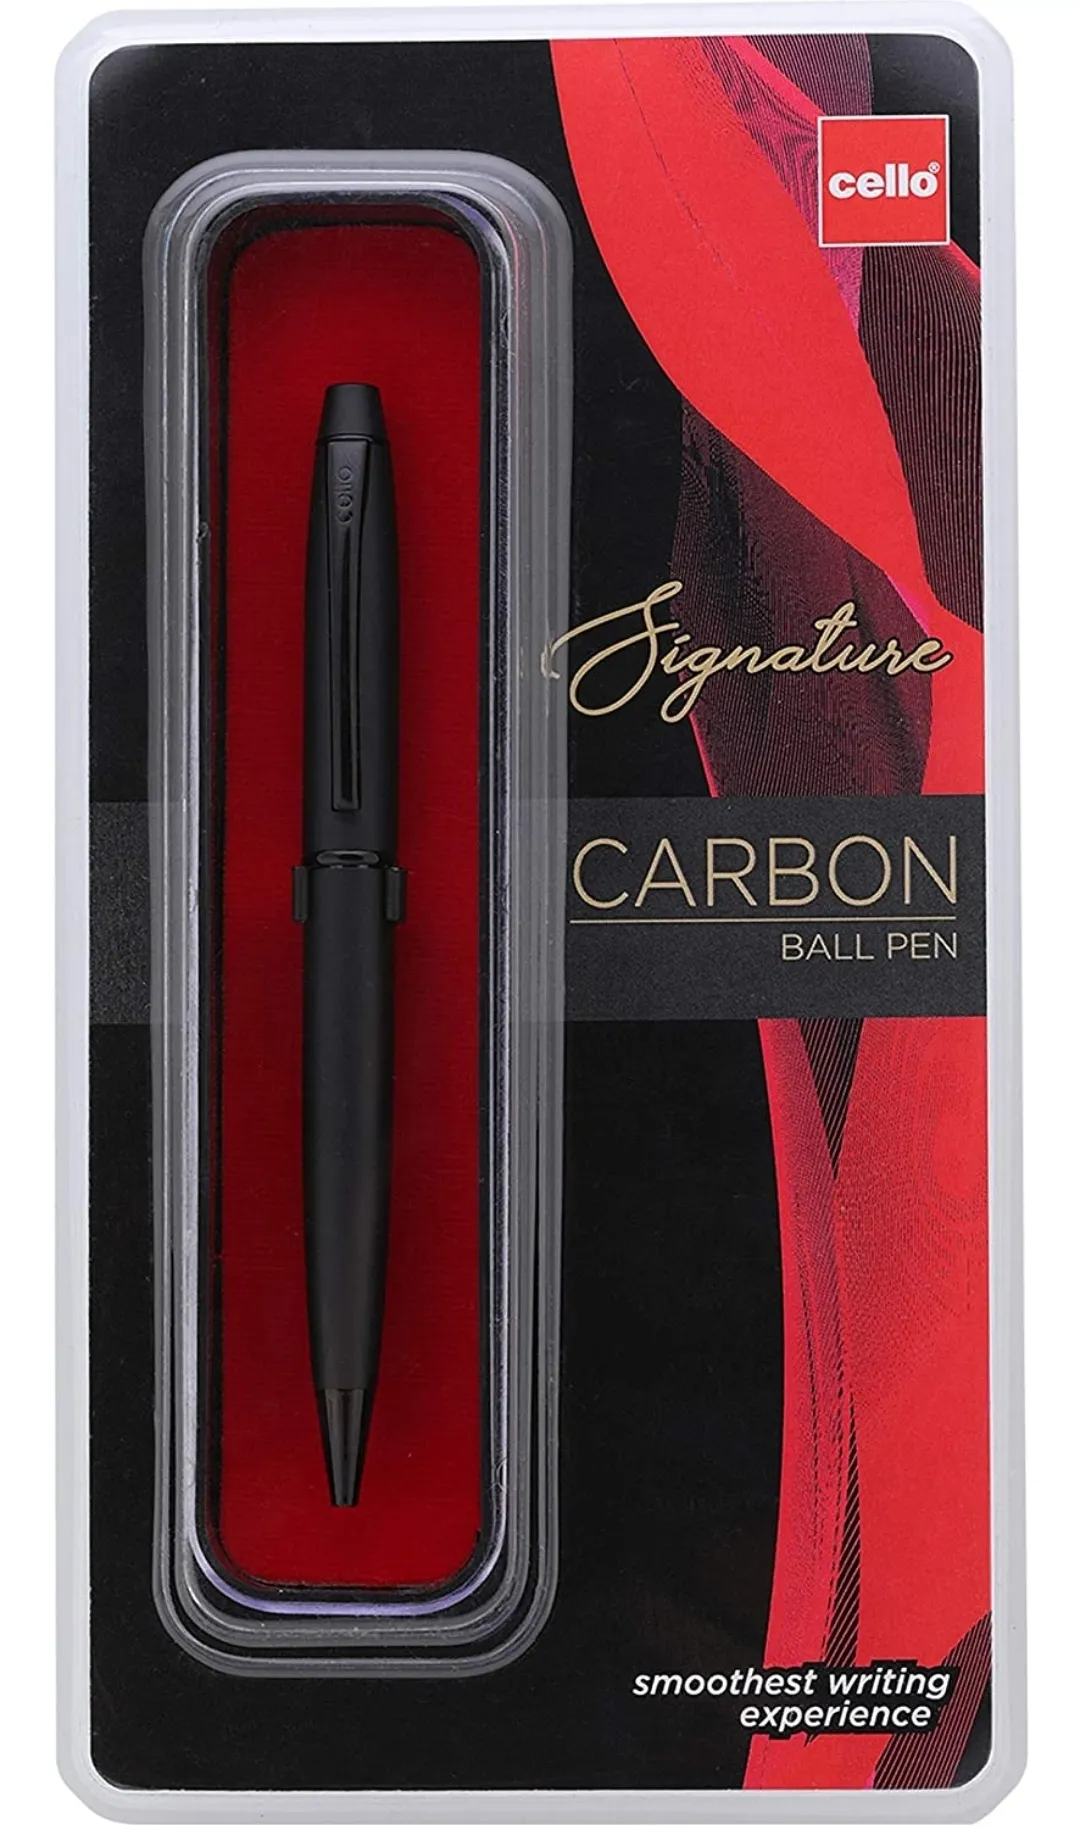 Cello Signature Carbon Ball Pen Blue Pen 0.7 mm Gift Pack of 1 Pen